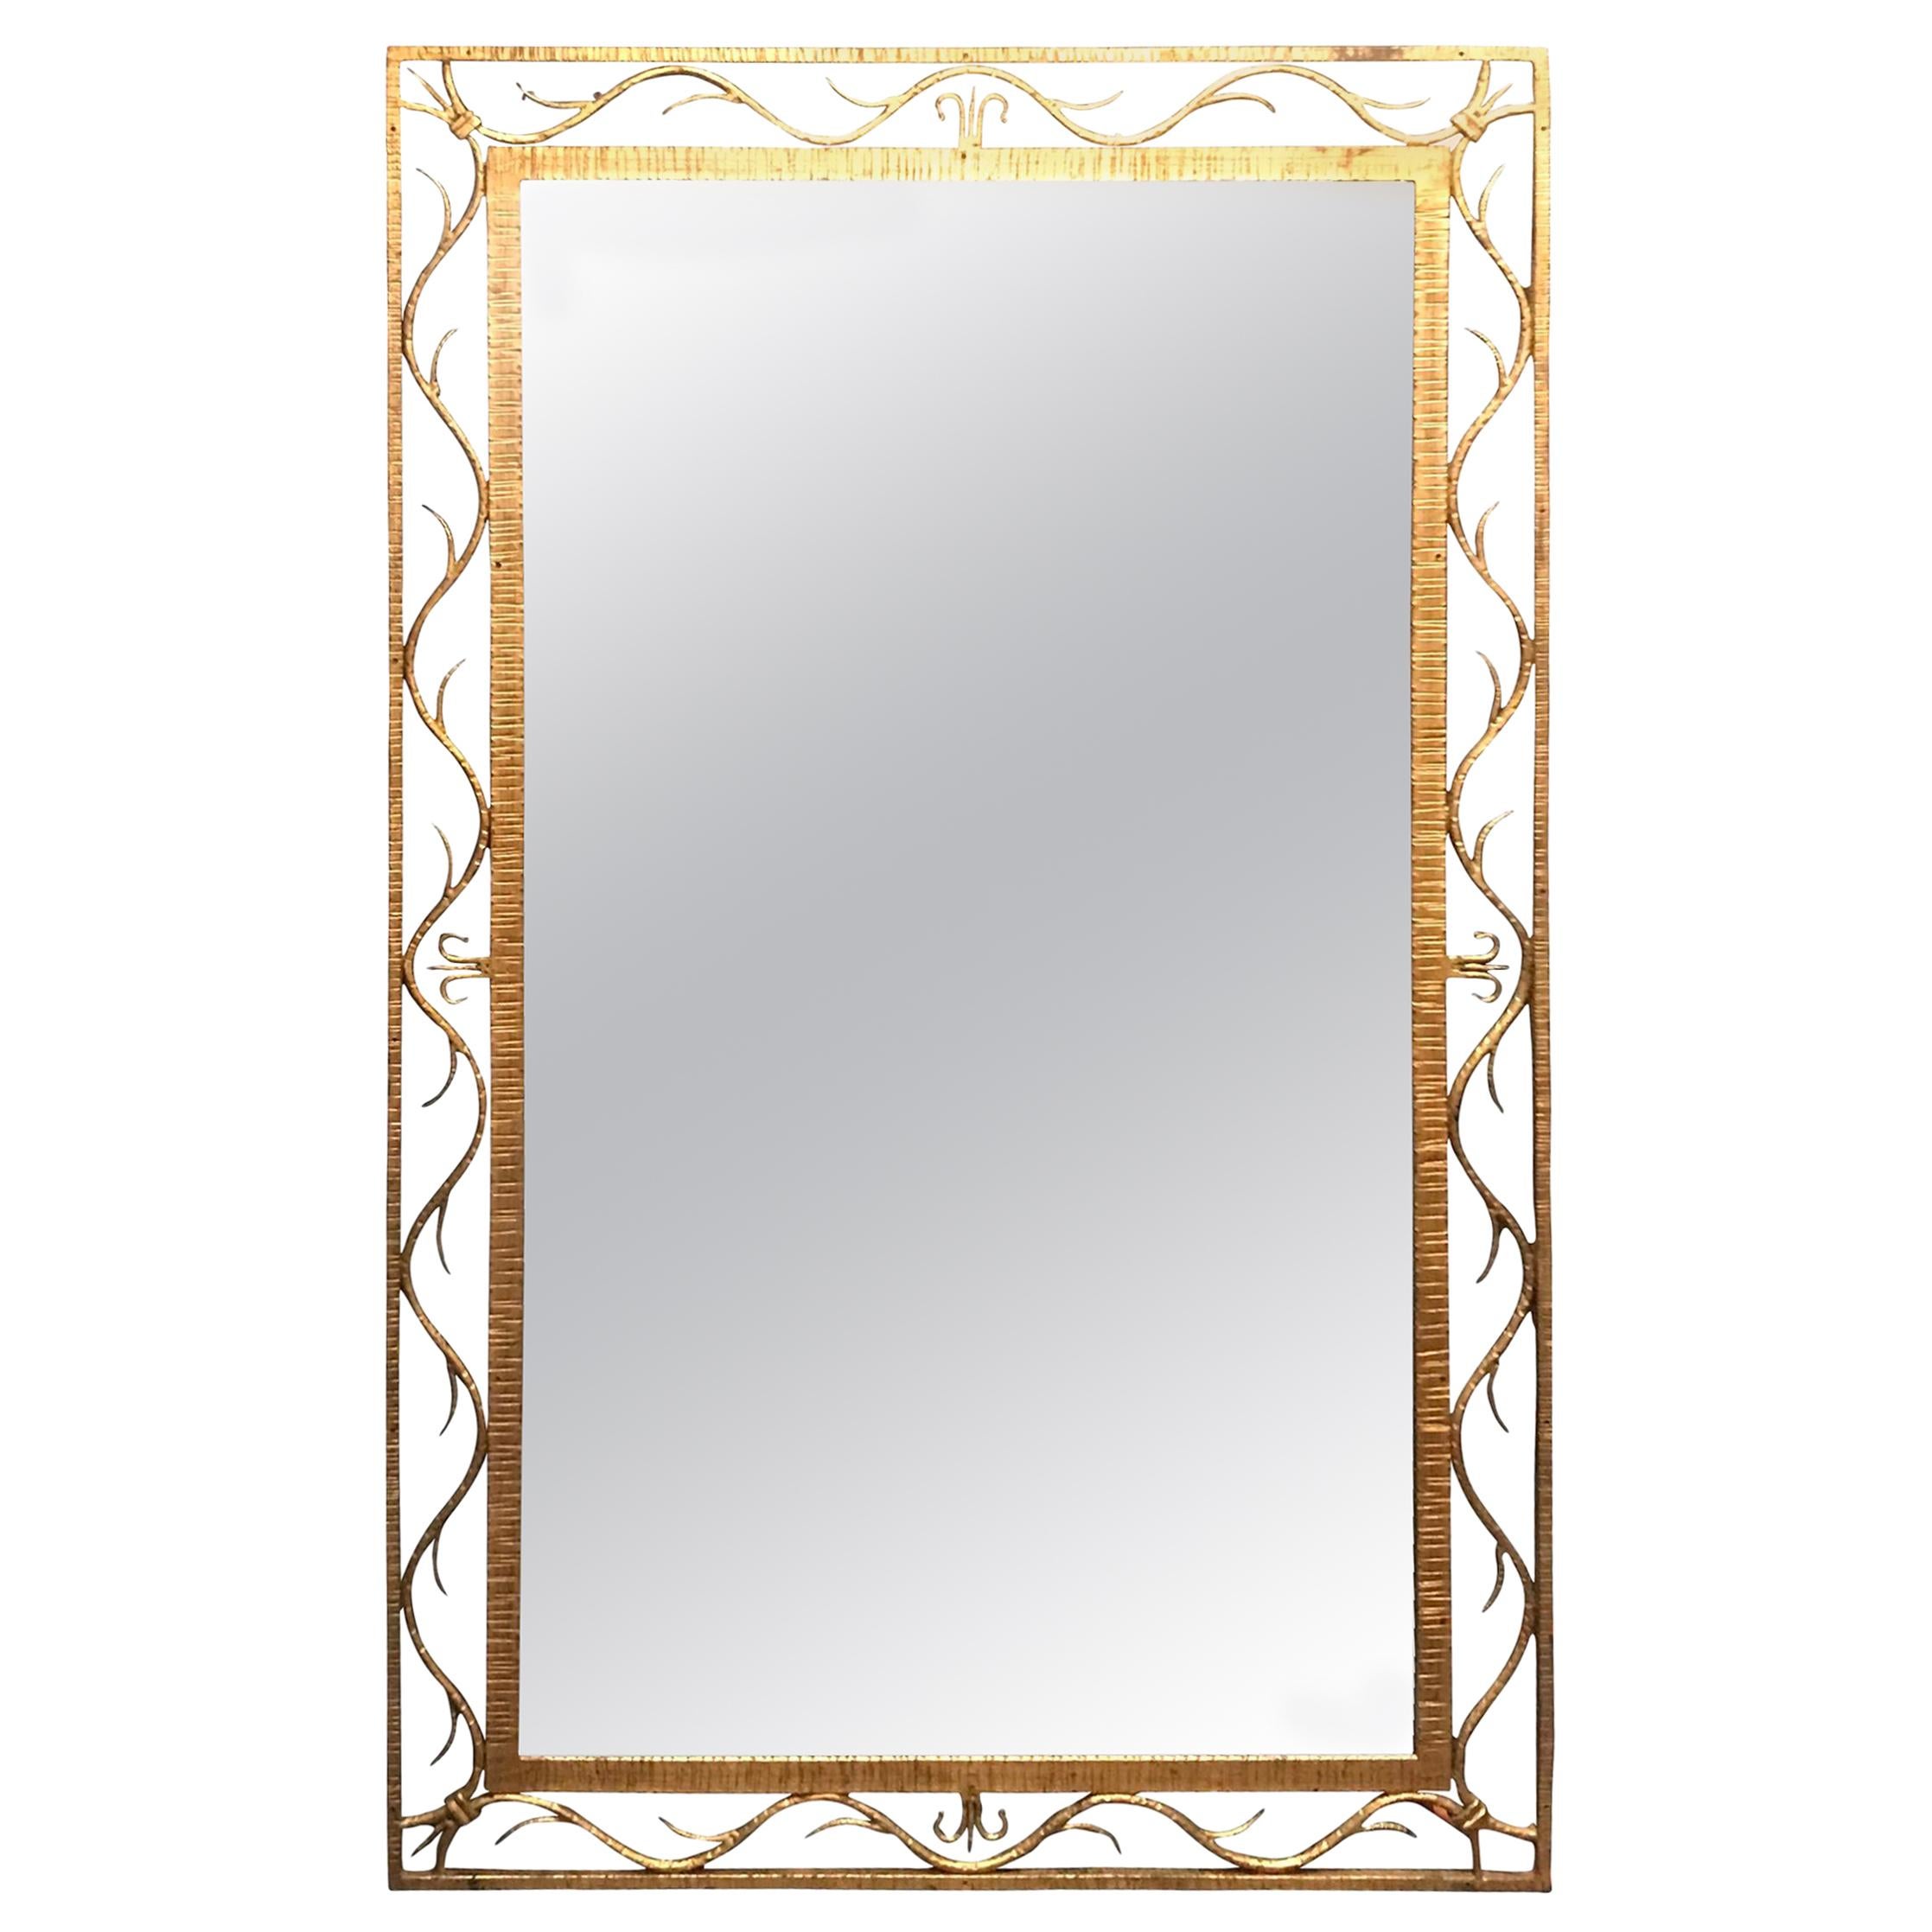 19th Century Gold Gilt Scroll Design Frame Mirror, France